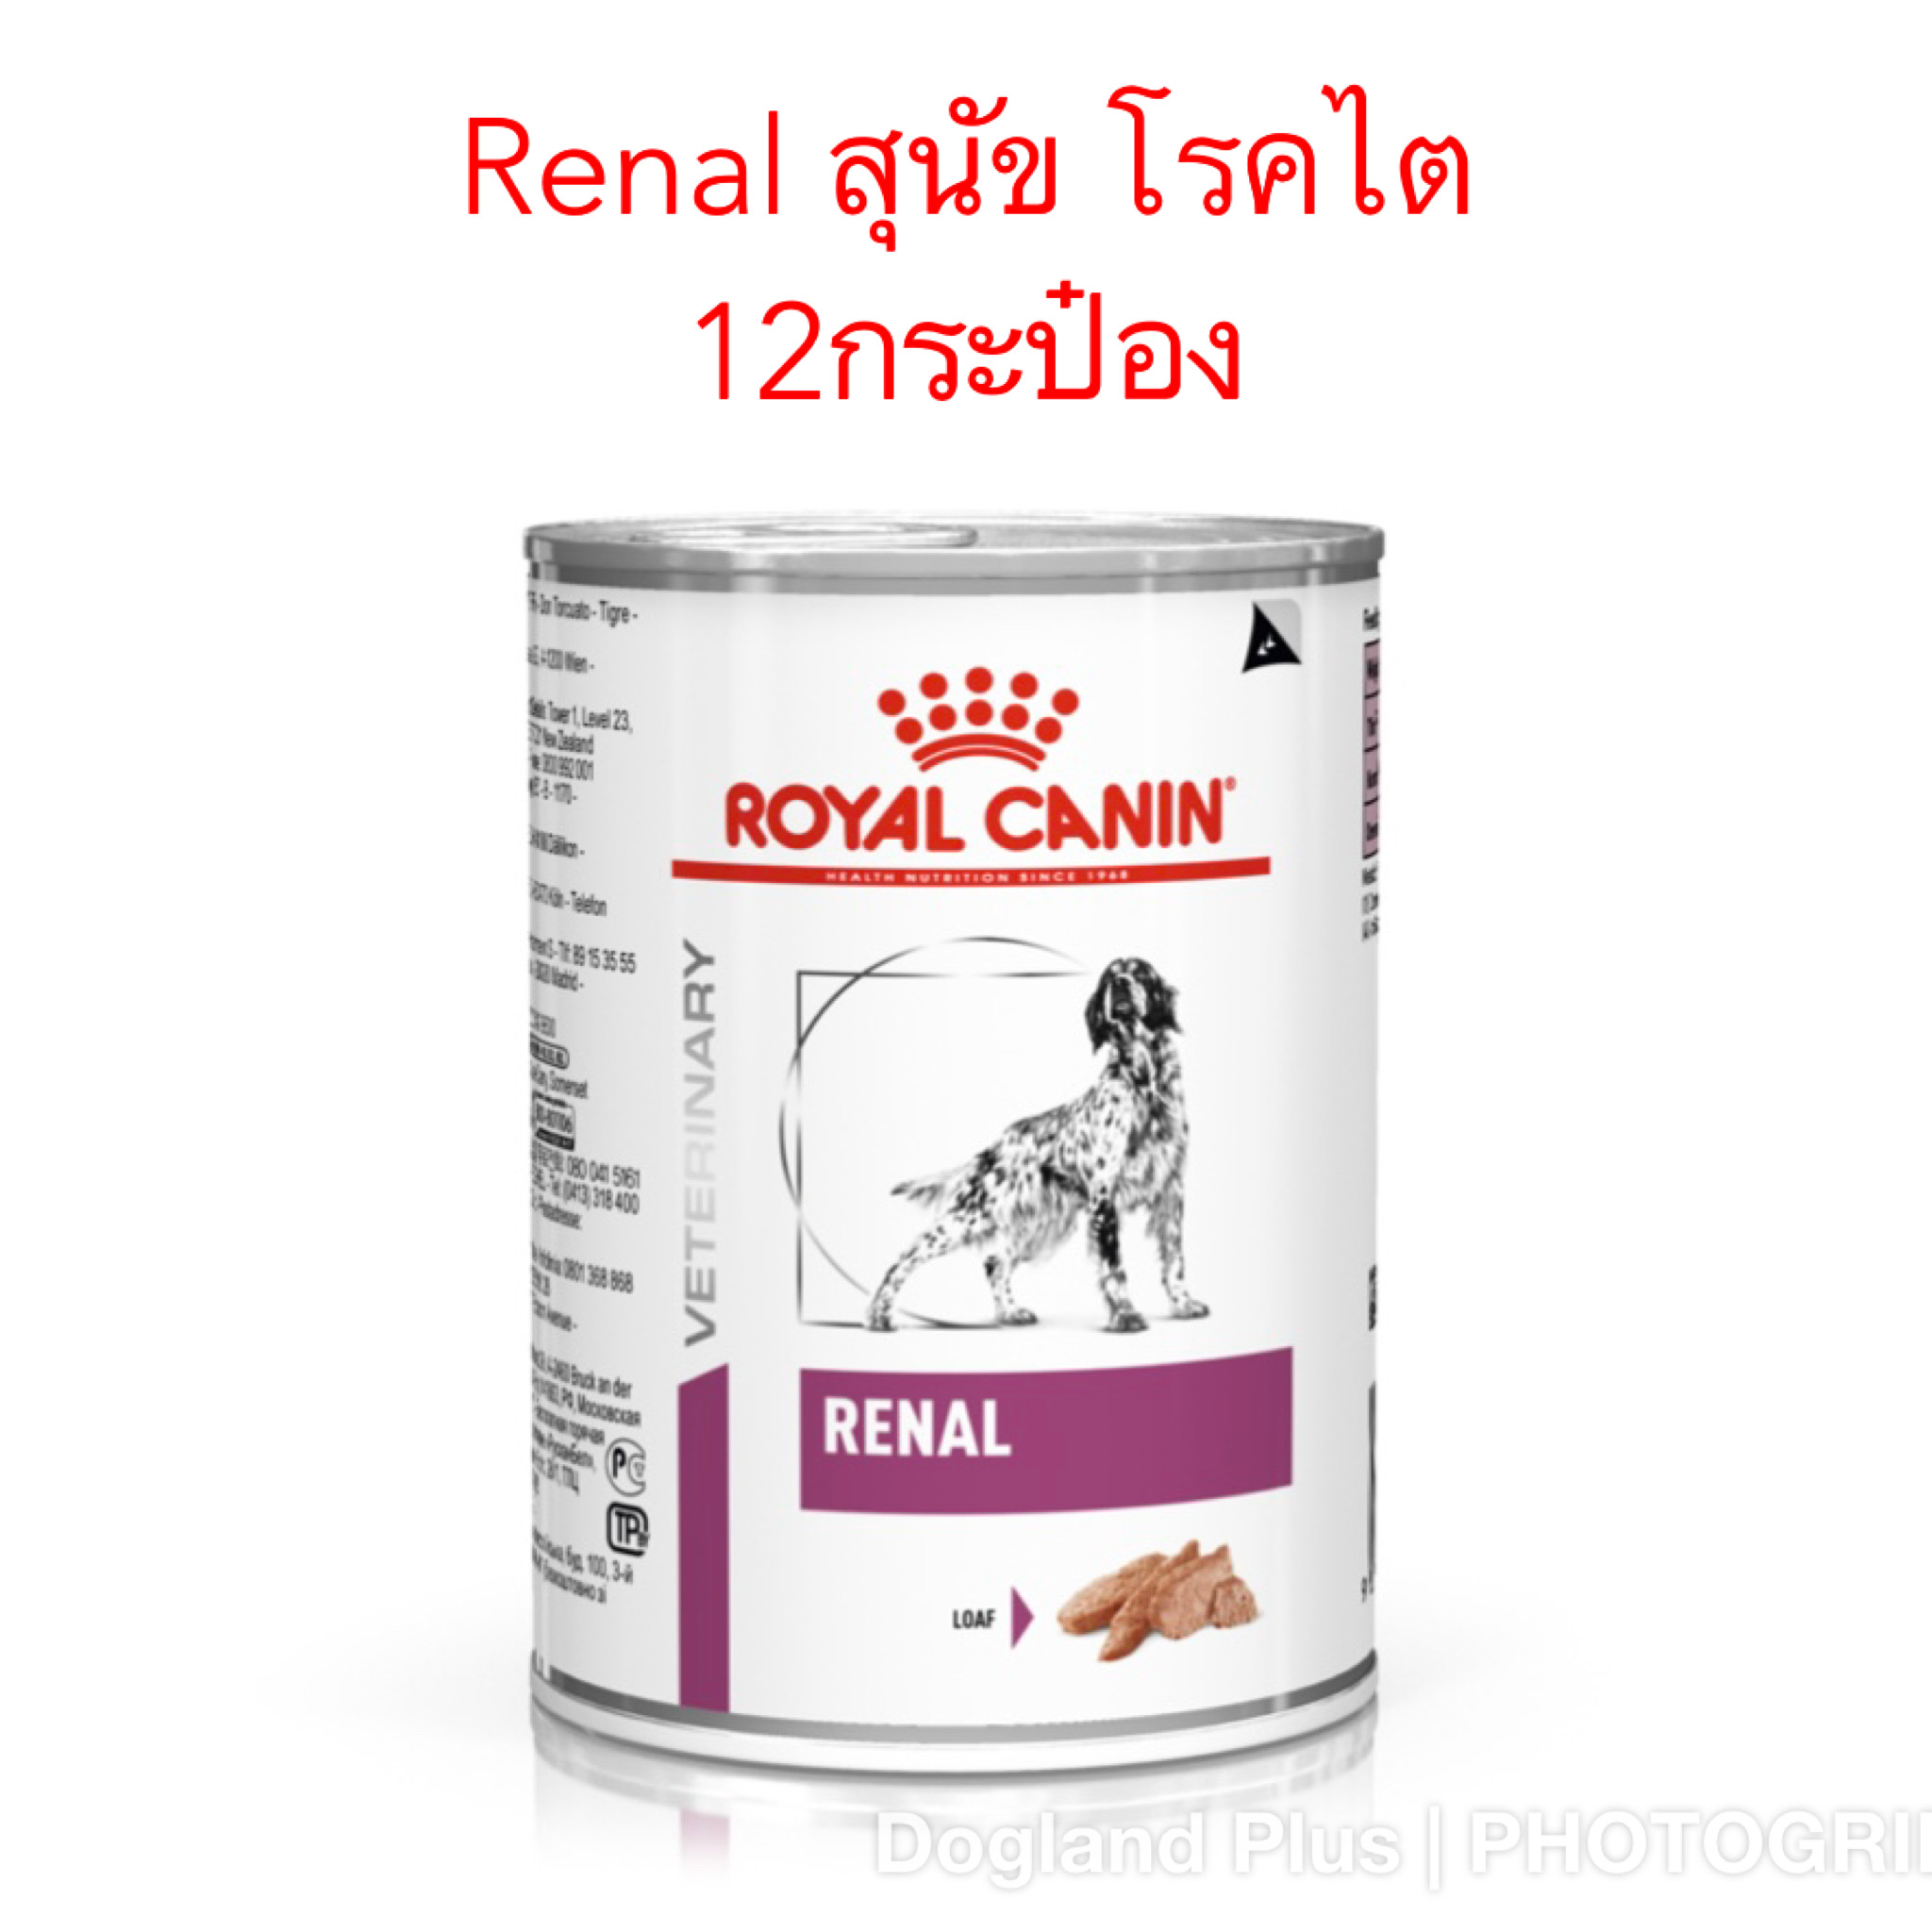 Royal Canin Renal สุนัข โรคไต กระป๋อง 410gX12กระป๋อง